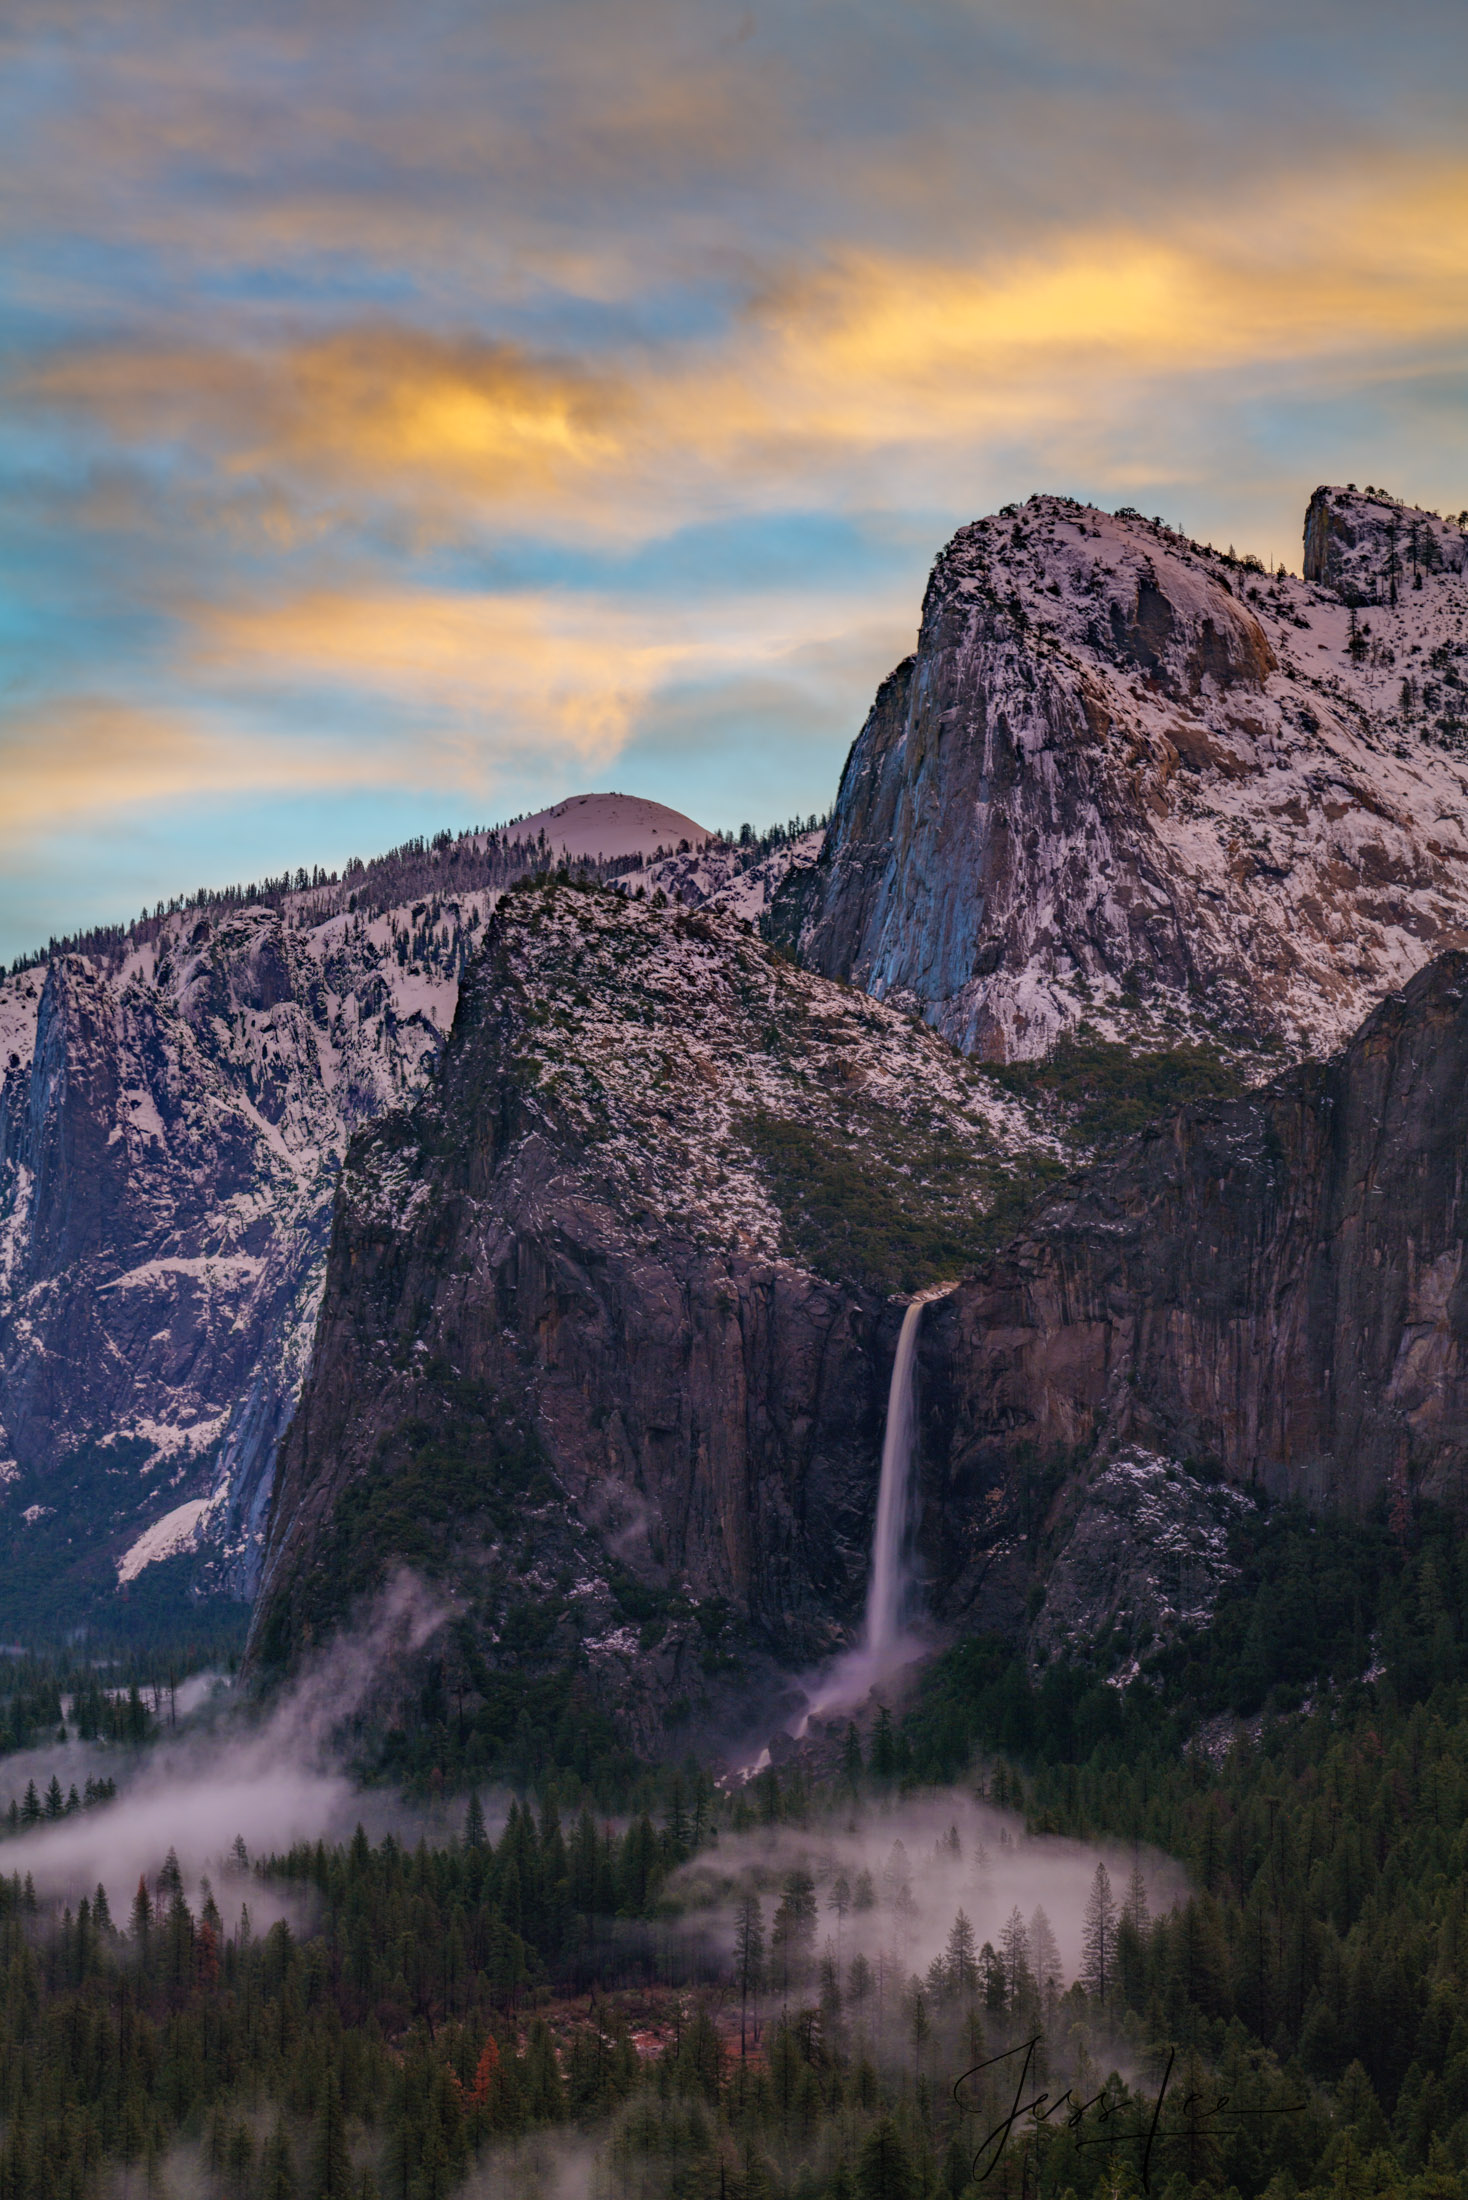 An awe-inspiring capture of a winter sunrise at Yosemite National Park, illuminating the majestic Bridalveil Falls with a radiant...